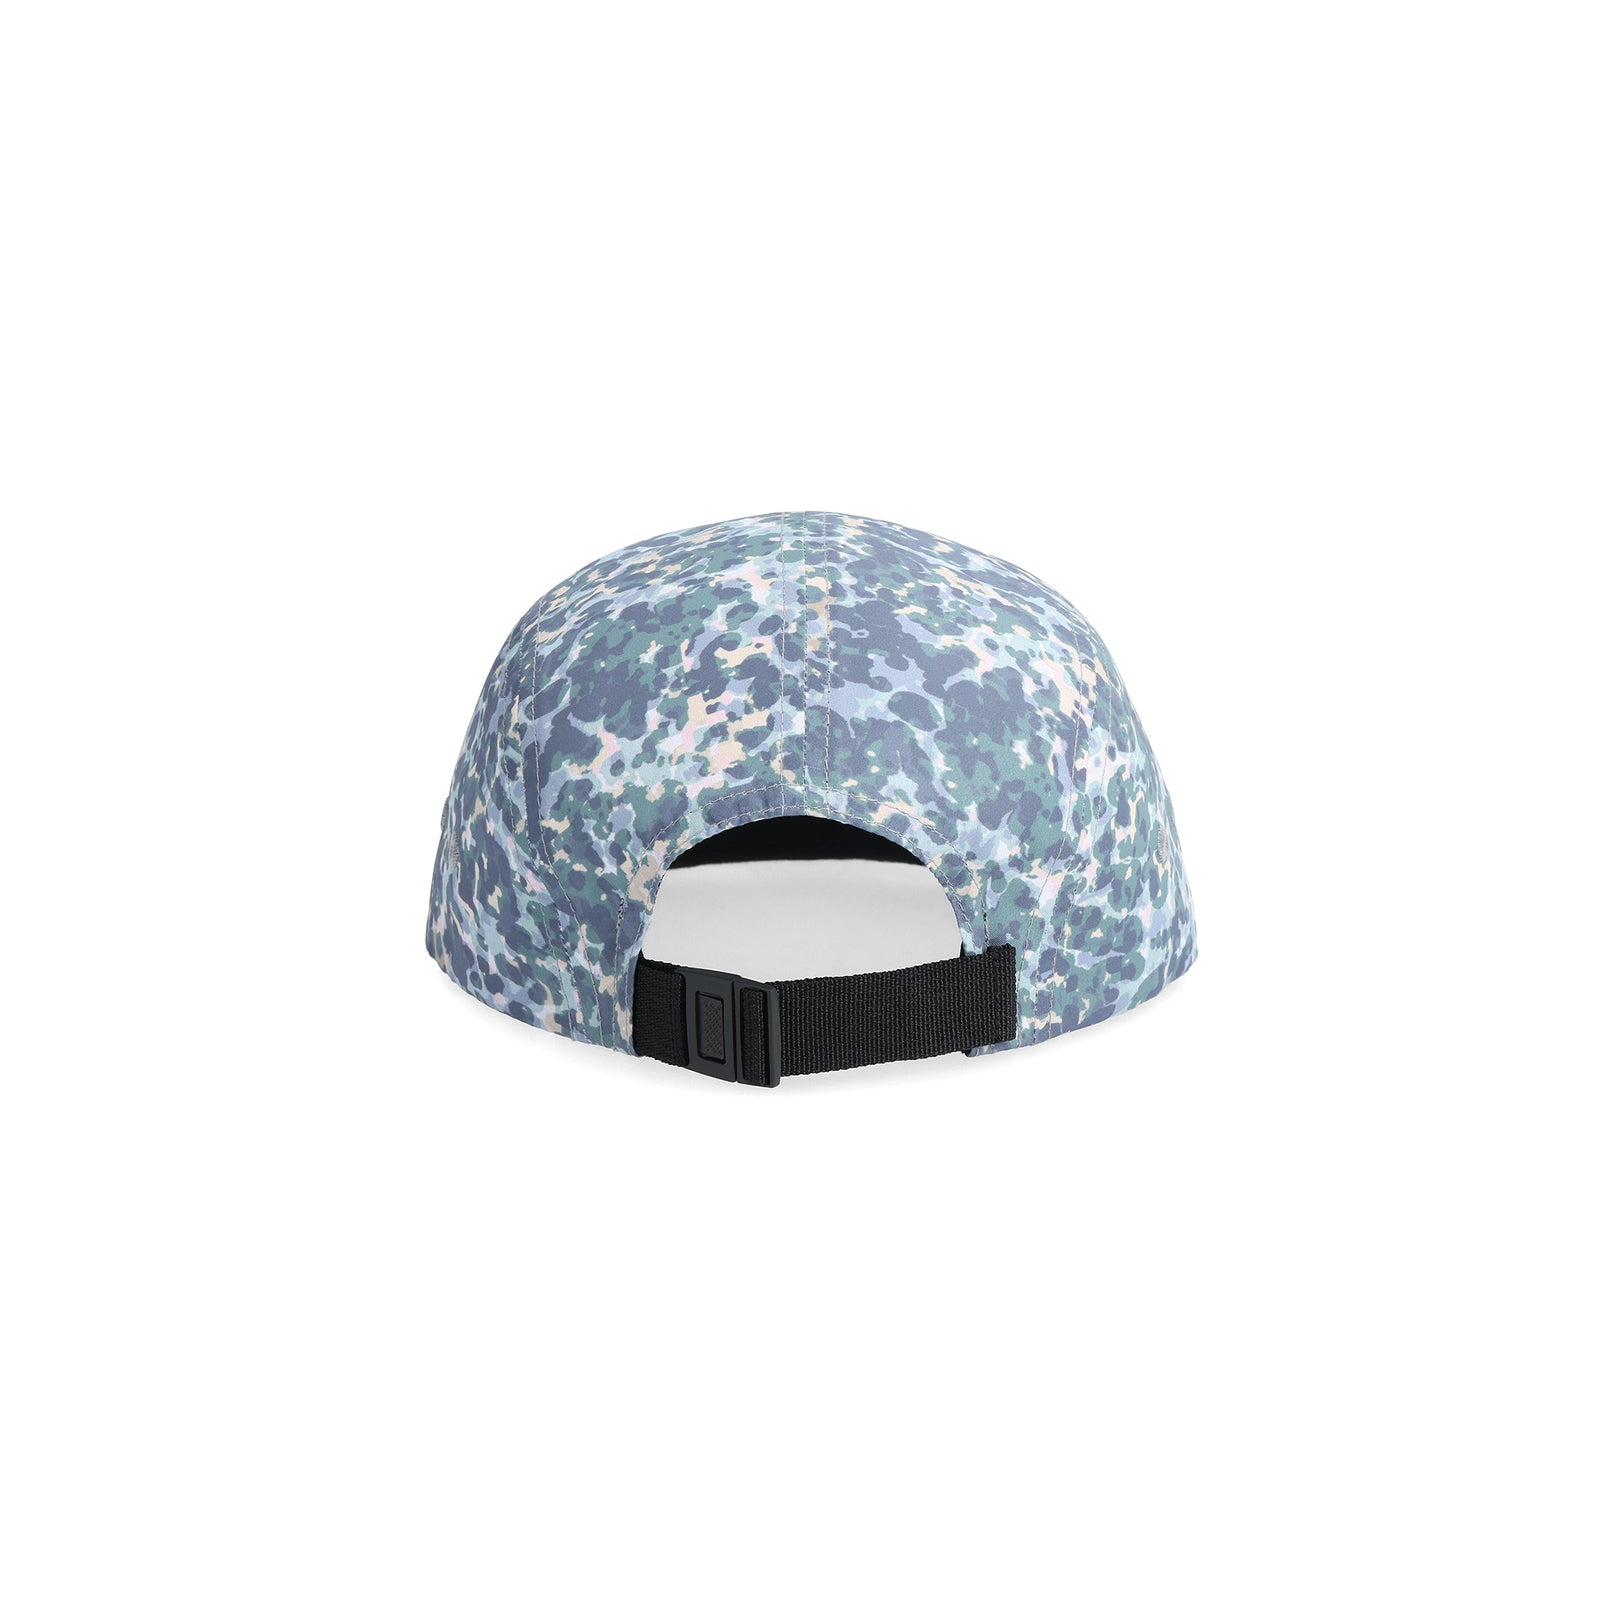 Back View of Topo Designs Nylon Camp Hat in "Slate Meteor"